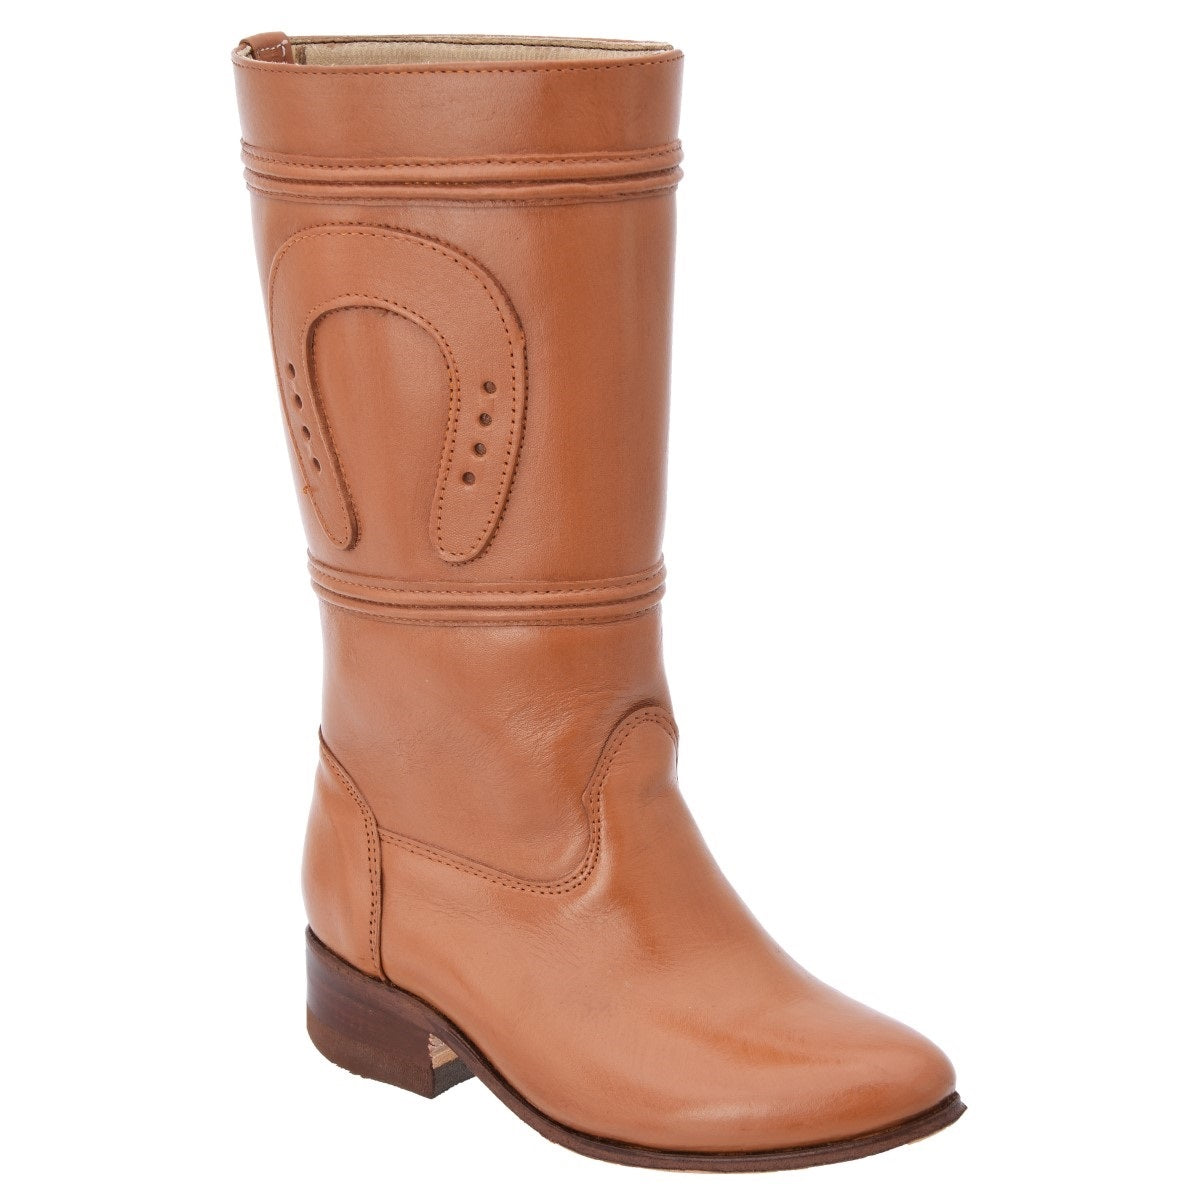 Botas vaqueras para ninas TM-WD0428 - Girls Western Boots